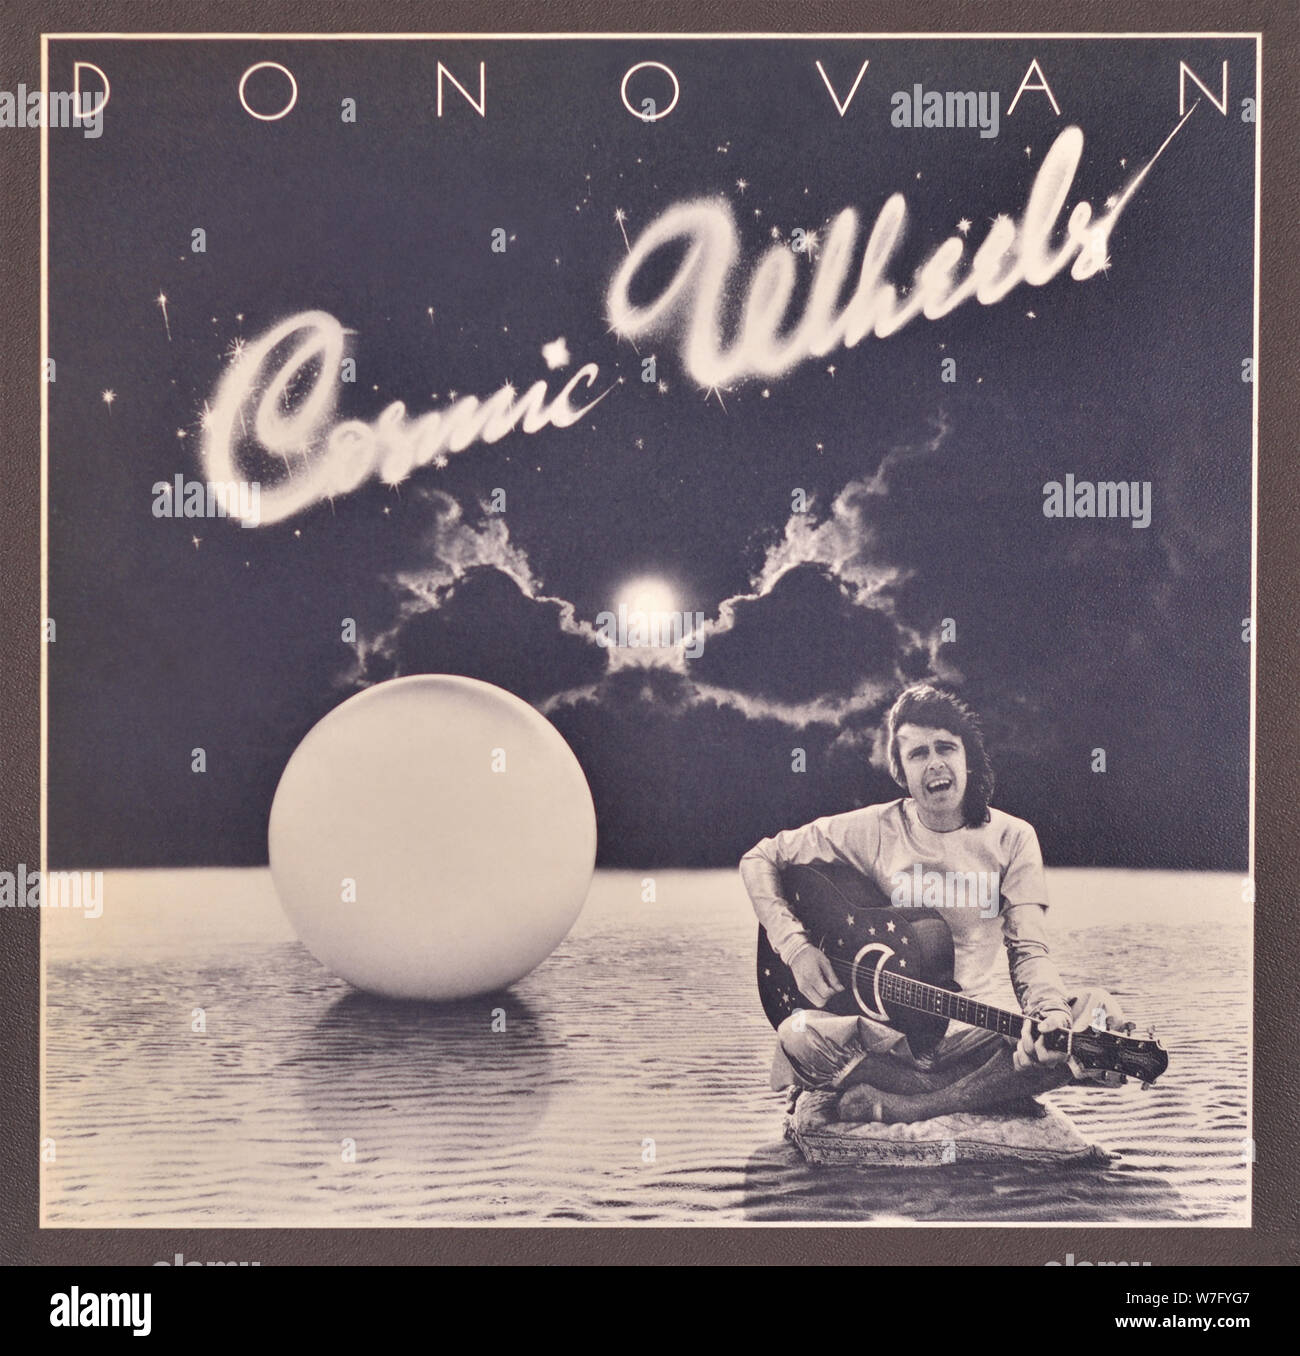 Donovan - original vinyl album cover - Cosmic Wheels - 1994 Stock Photo